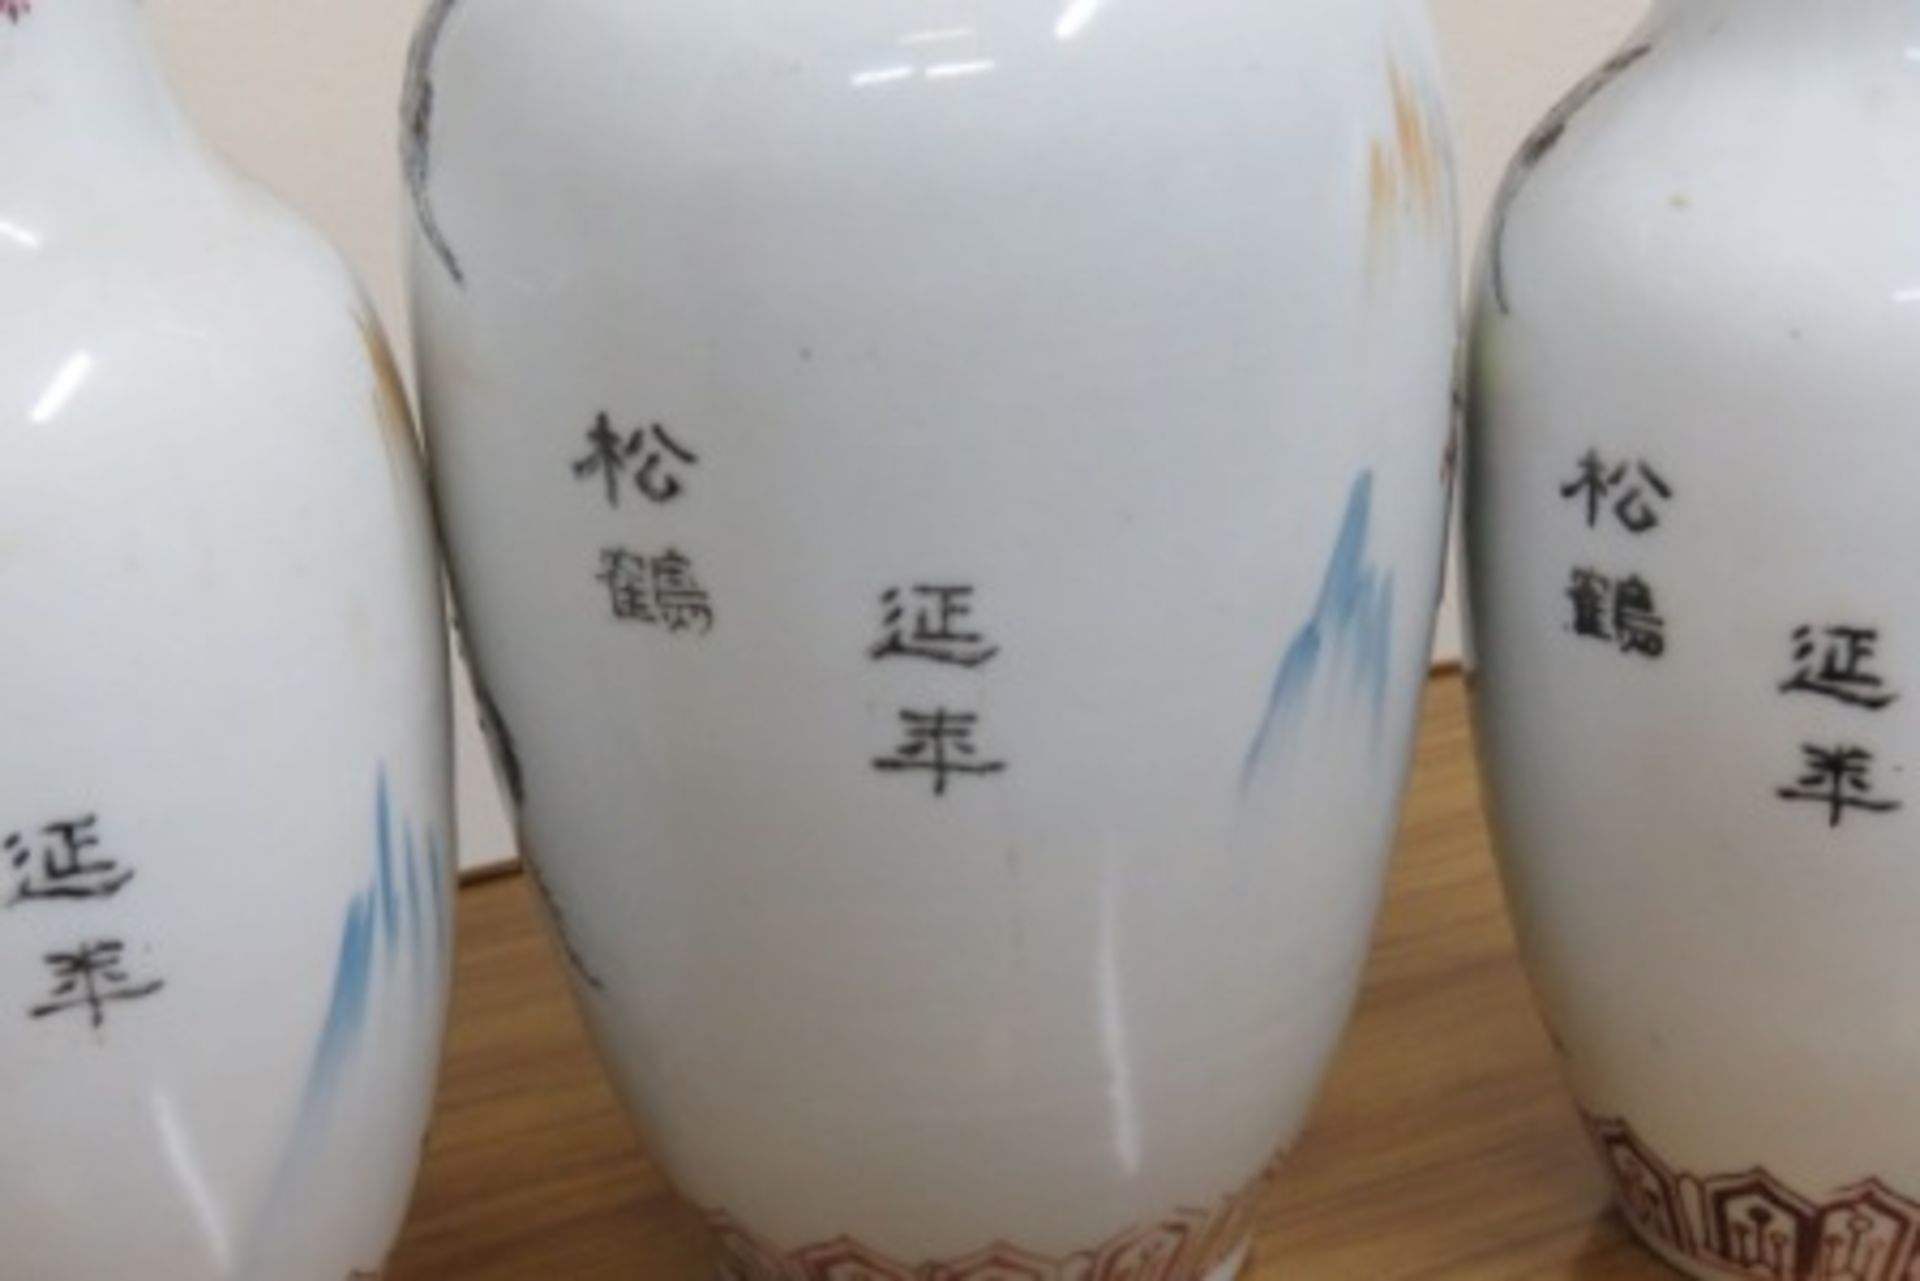 Oriental Decorative Porcelain Vases (Set Of) Depicting Crane Birds, Chinese Markings To The Base - Image 2 of 3